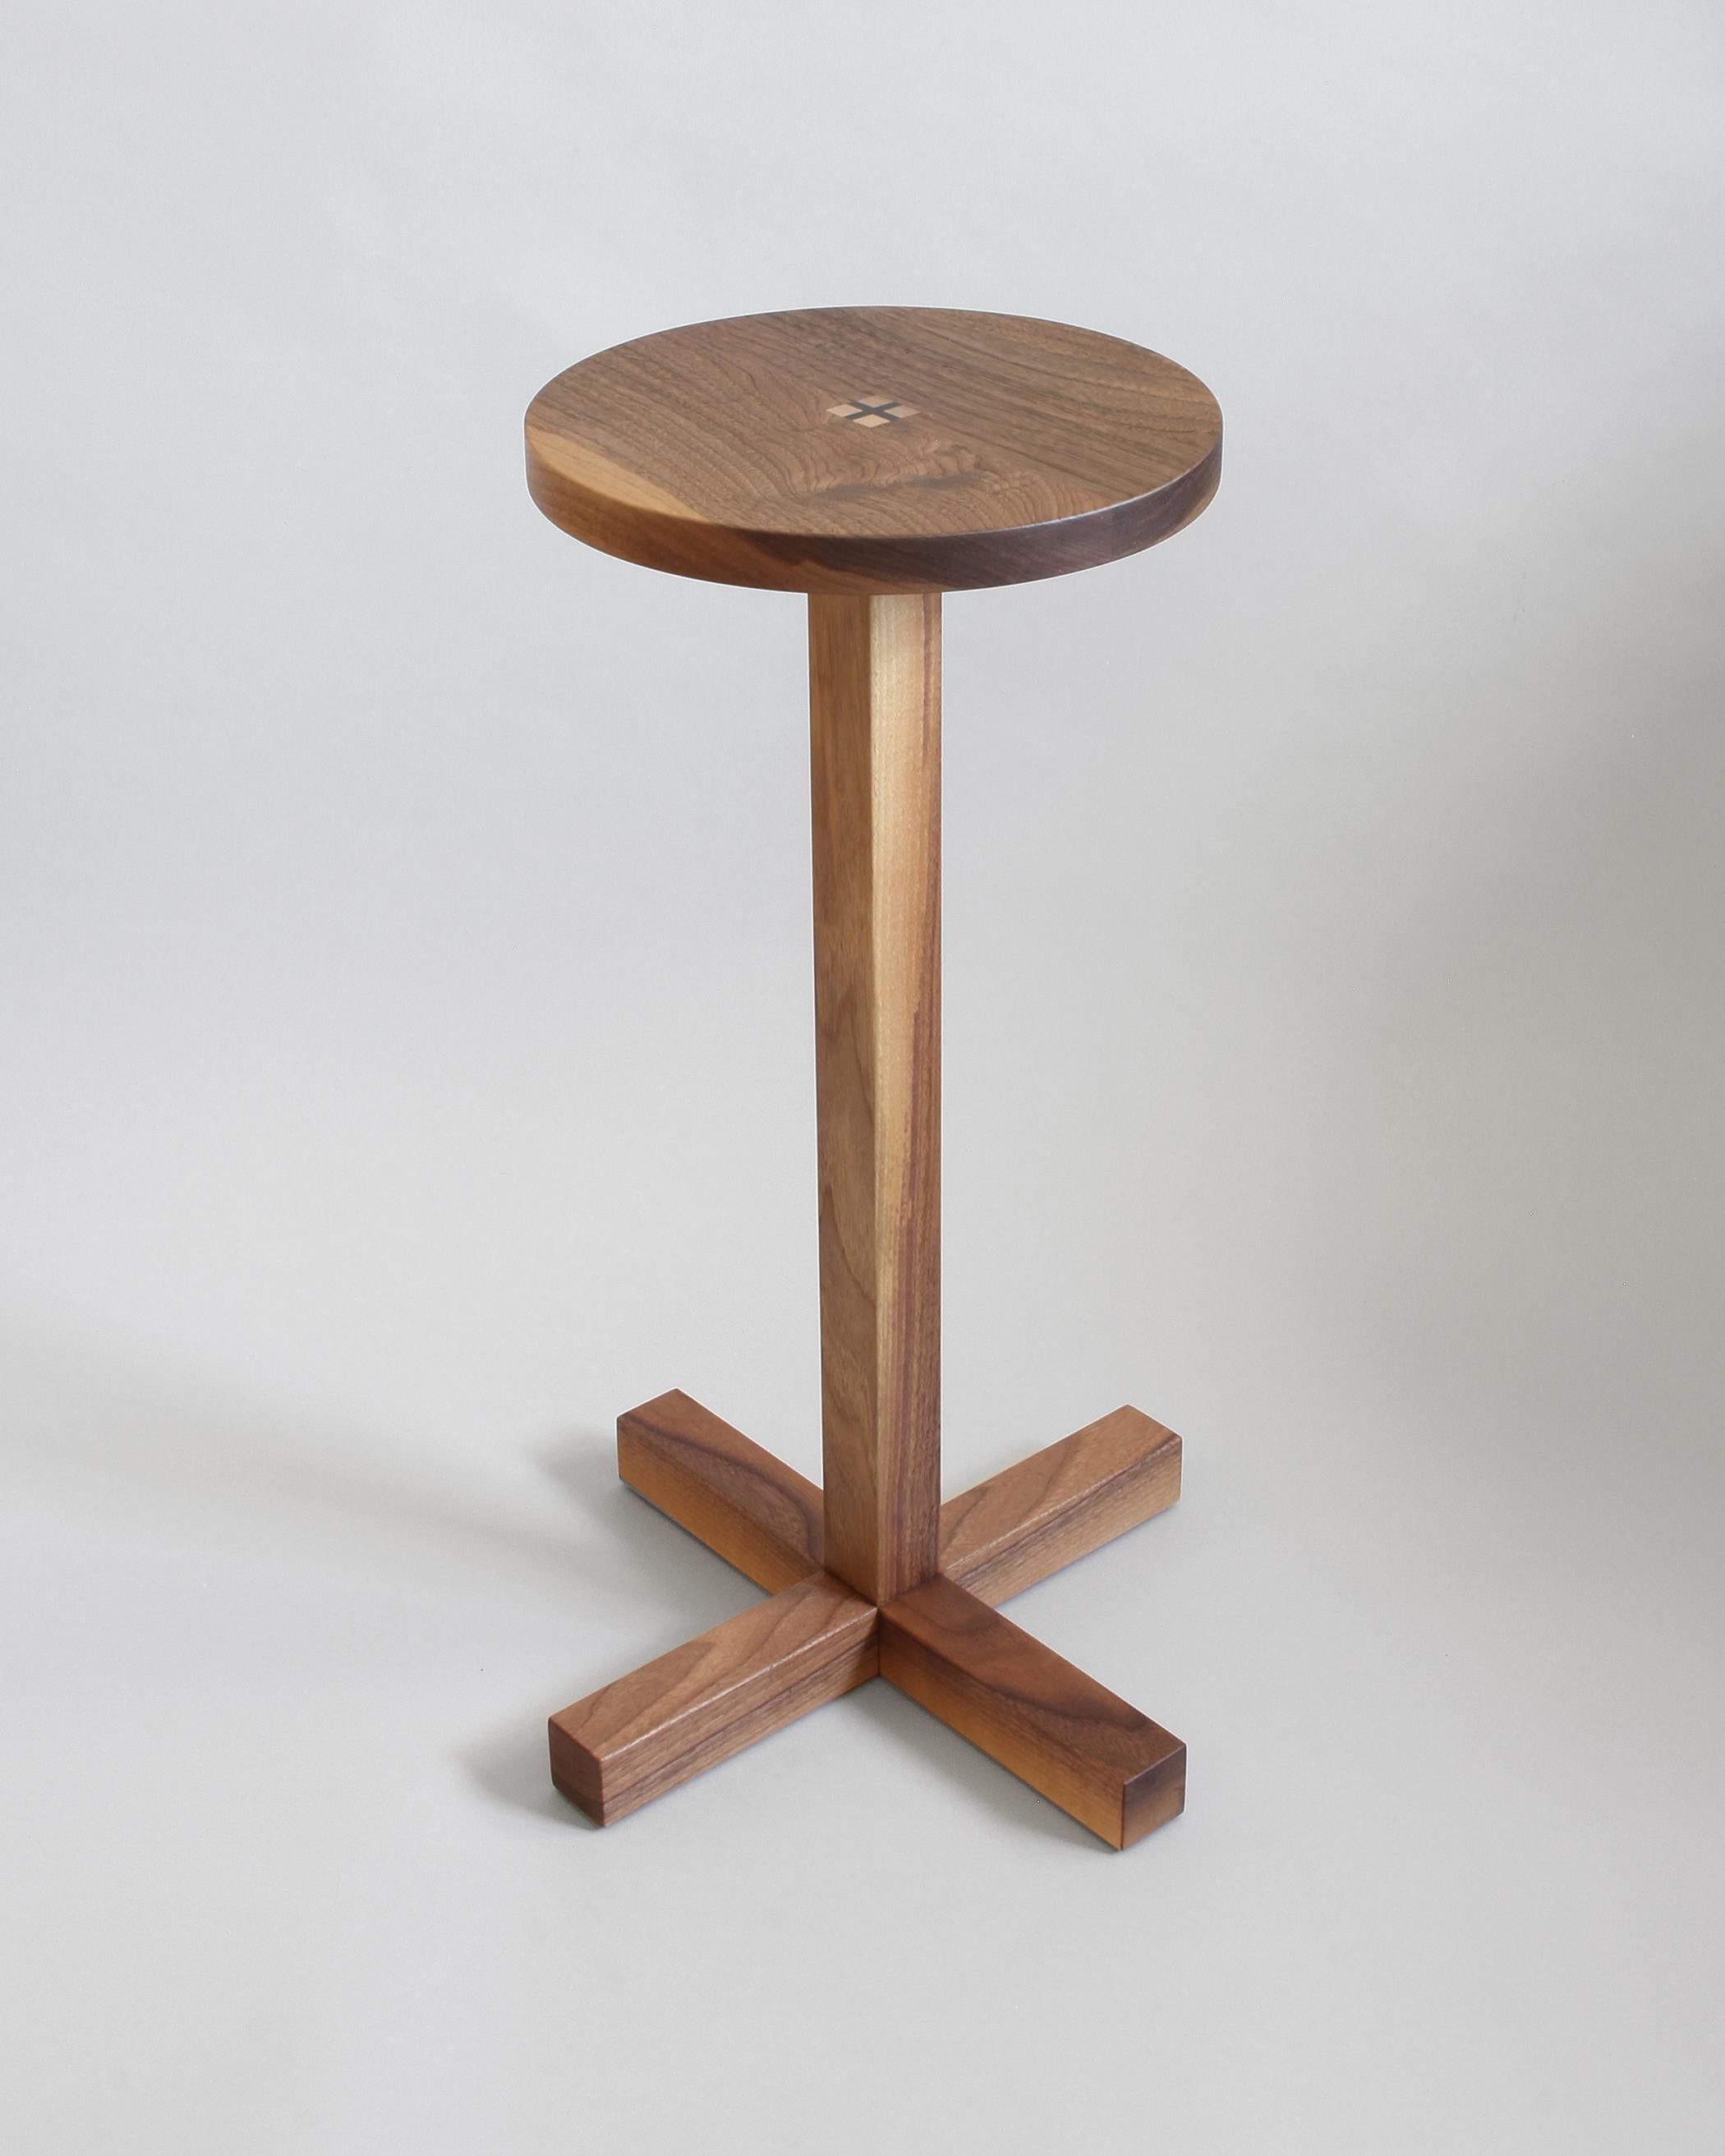 Minimalist Drink Table in Solid Walnut by Elliott Marks